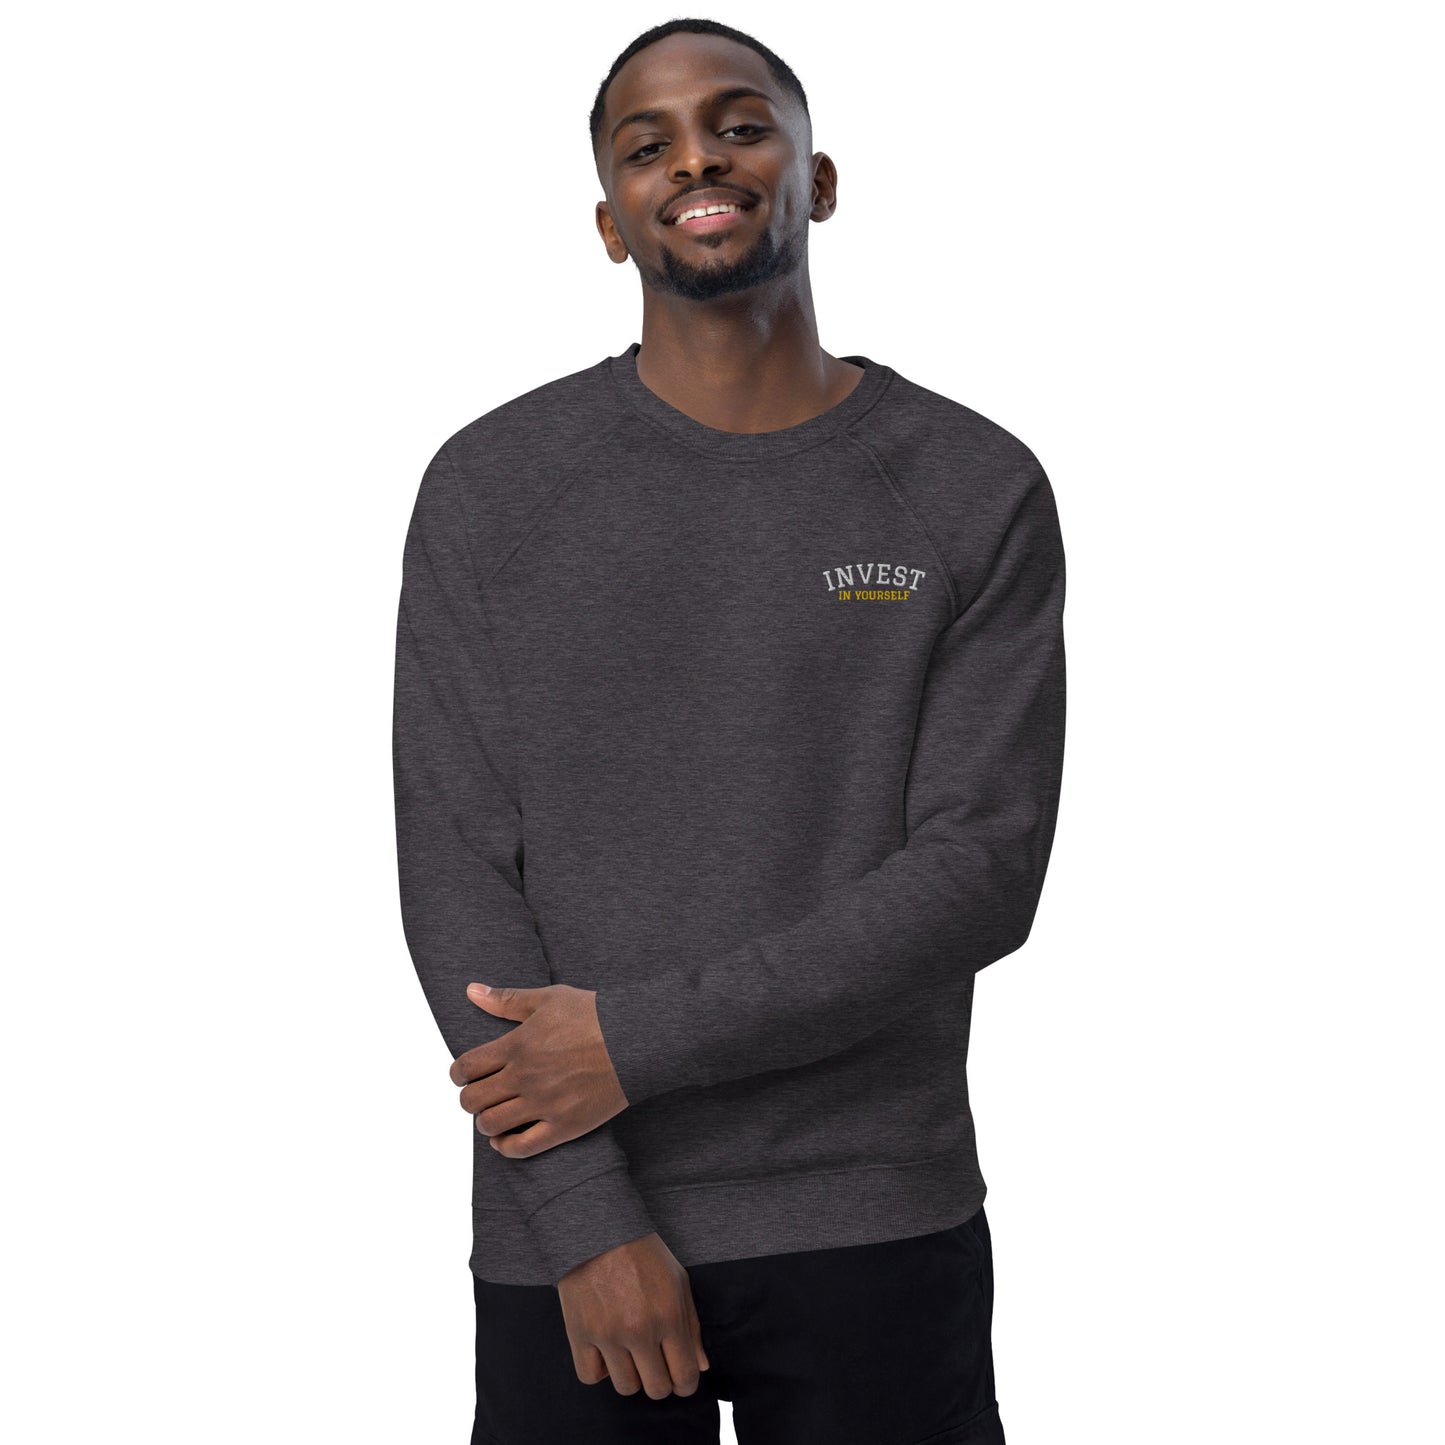 INVEST IN YOURSELF - Unisex organic raglan sweatshirt